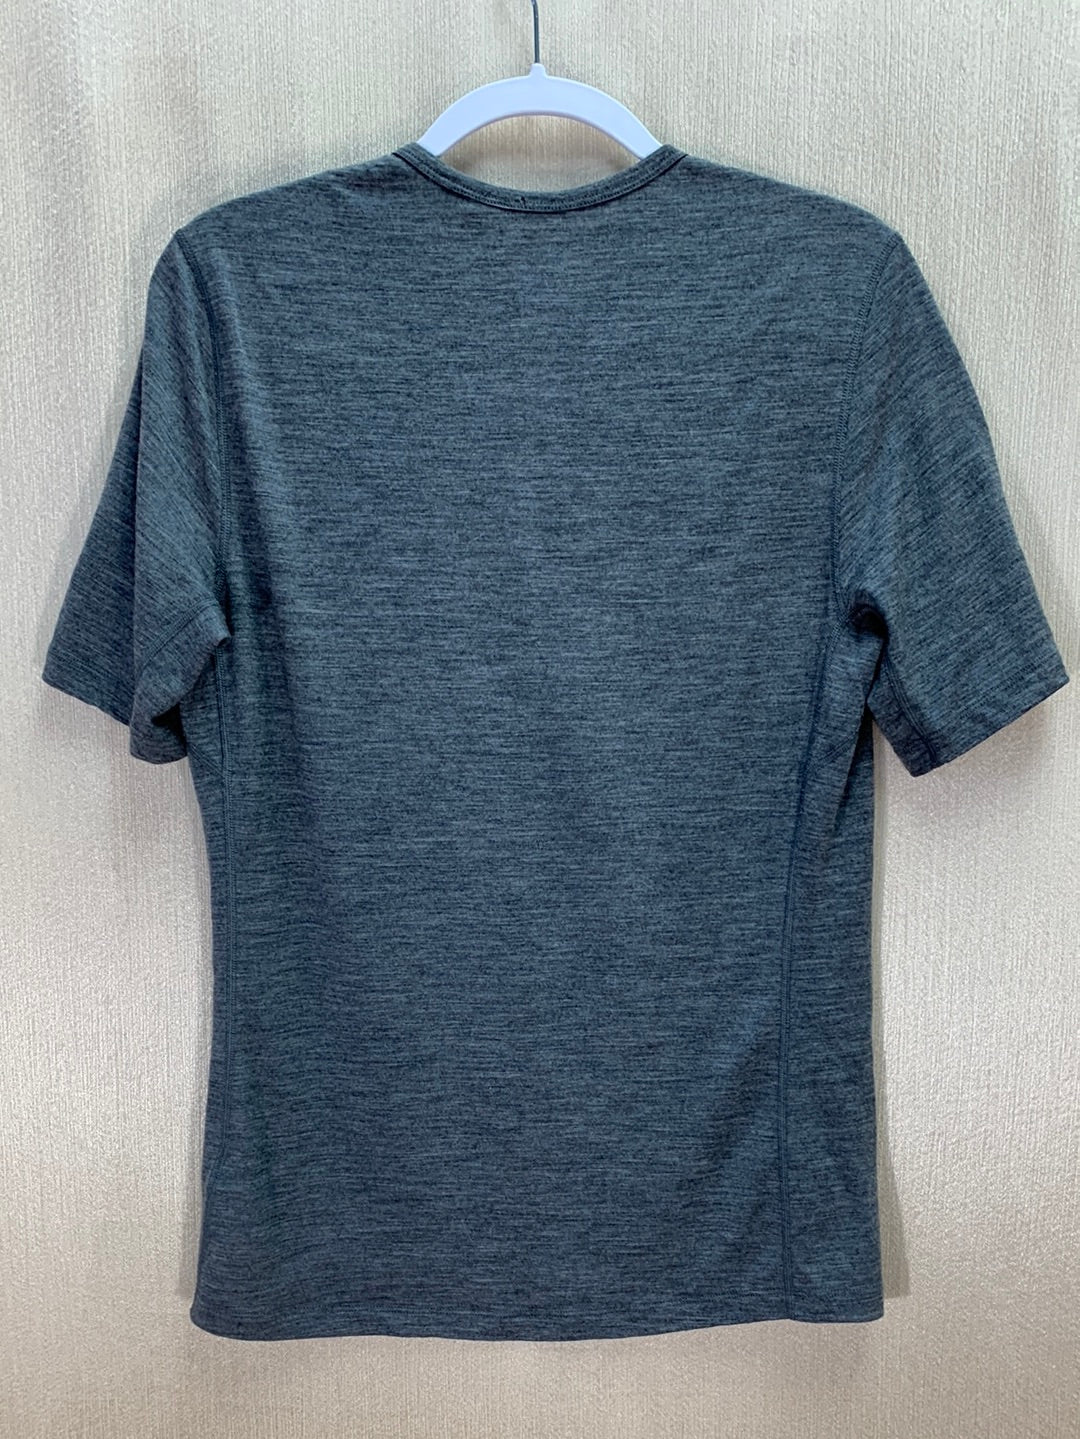 ICEBREAKER heather grey Merino Wool Short Sleeve T-Shirt - M